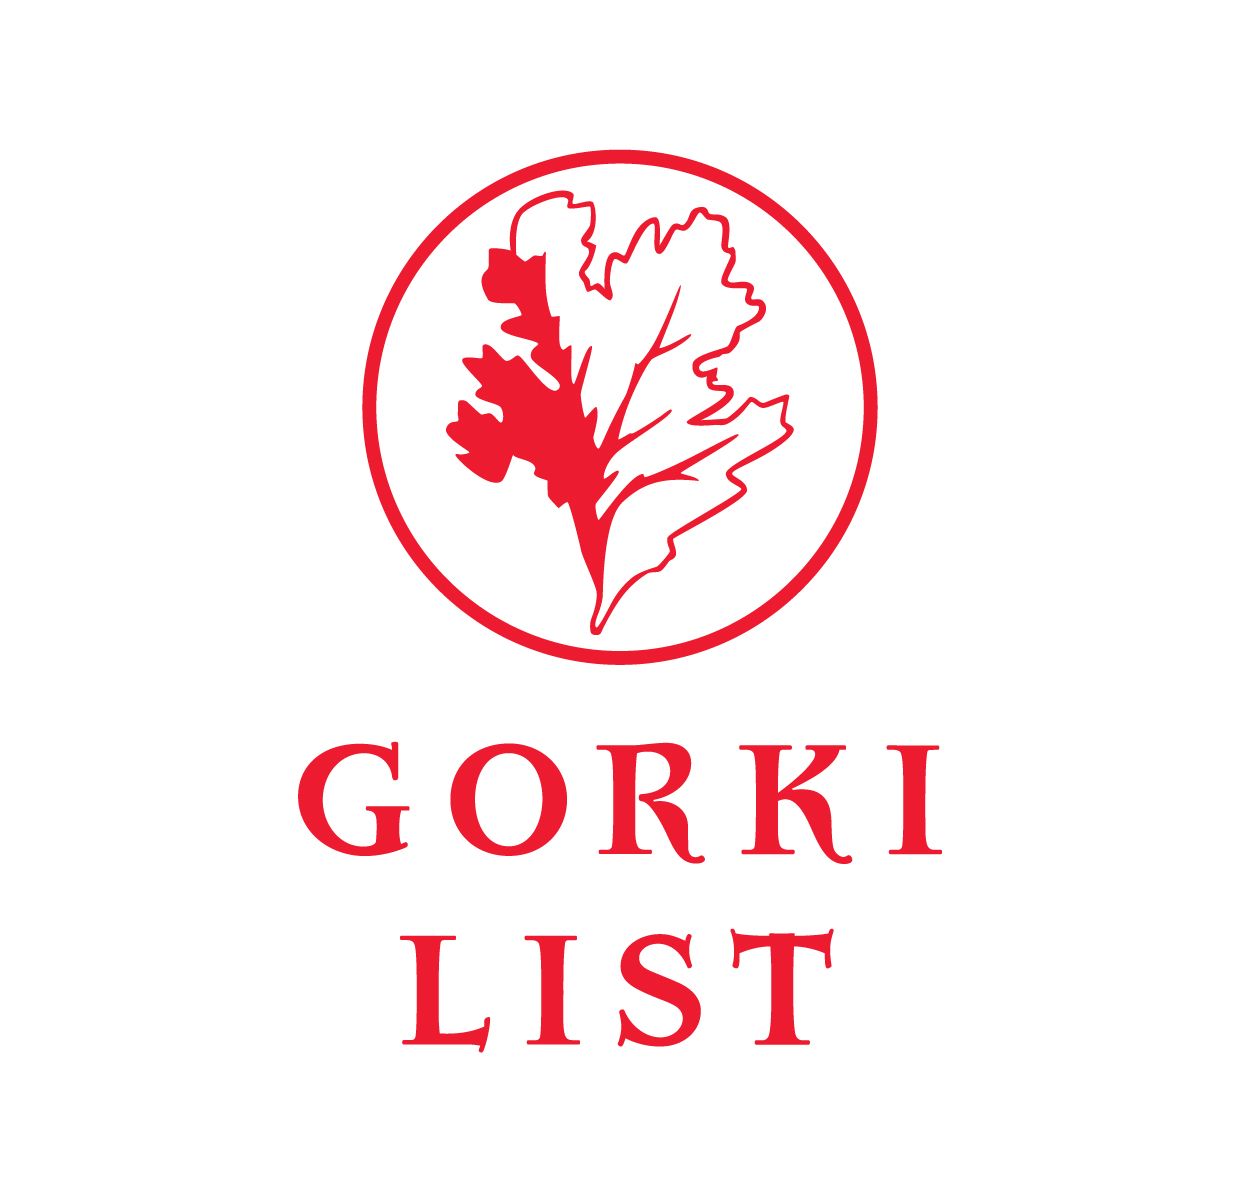 Gorki list logo